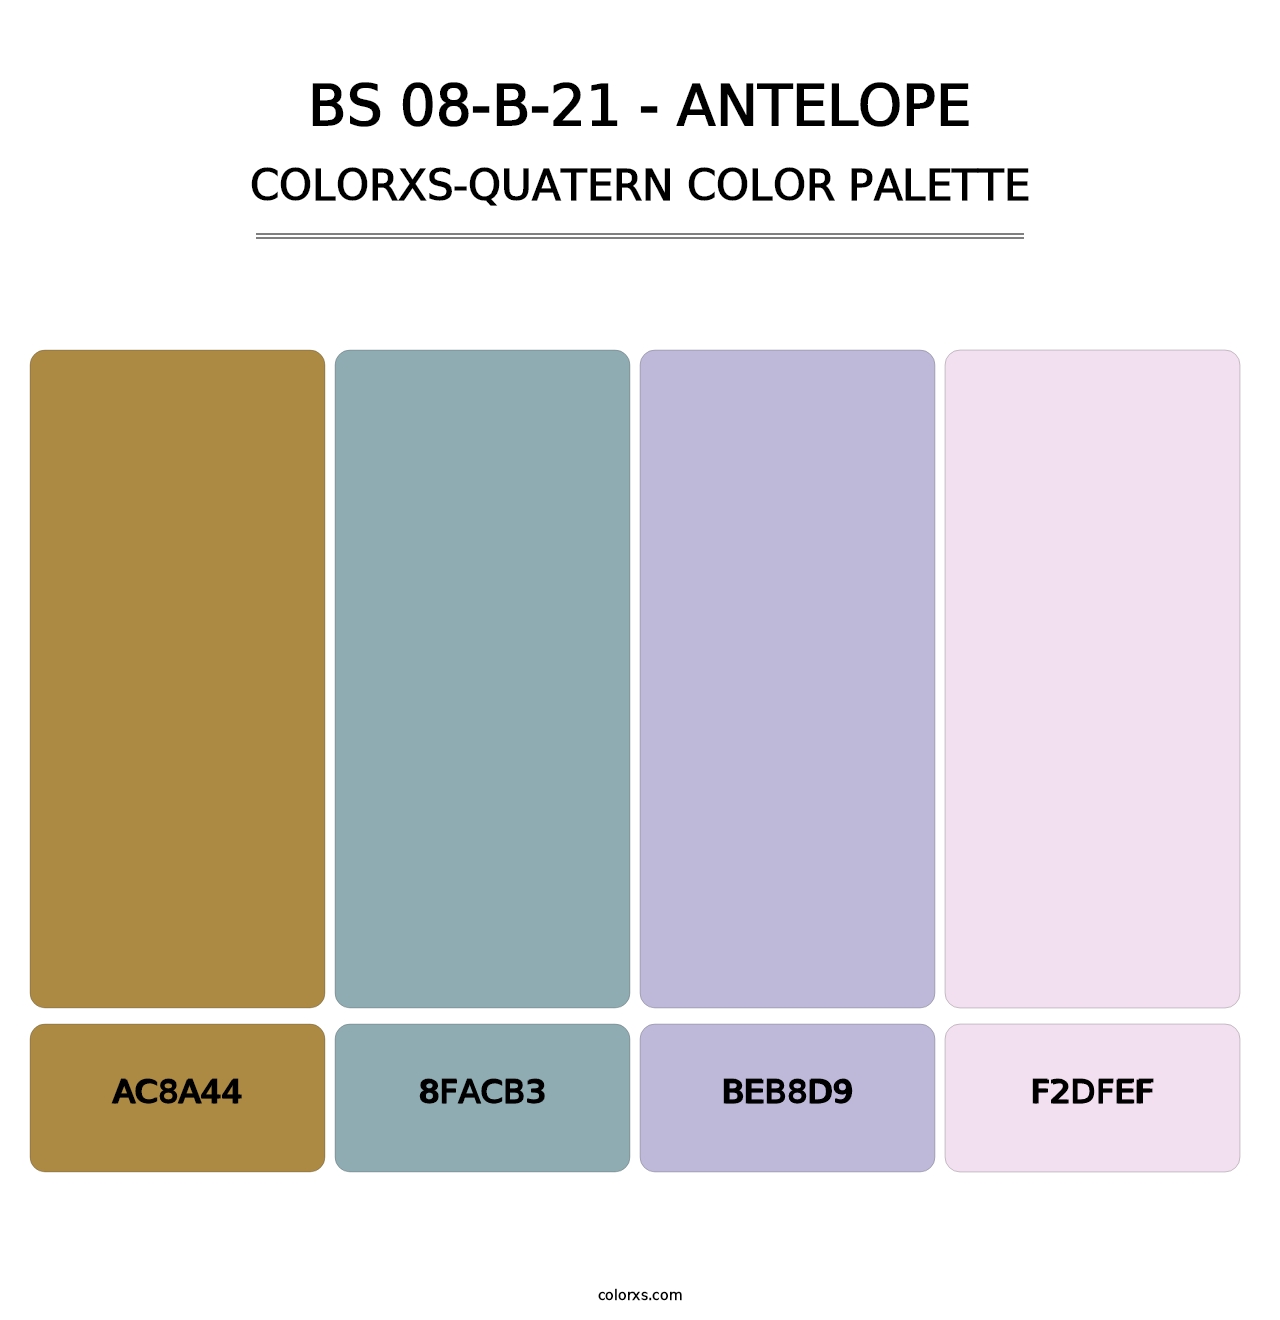 BS 08-B-21 - Antelope - Colorxs Quatern Palette